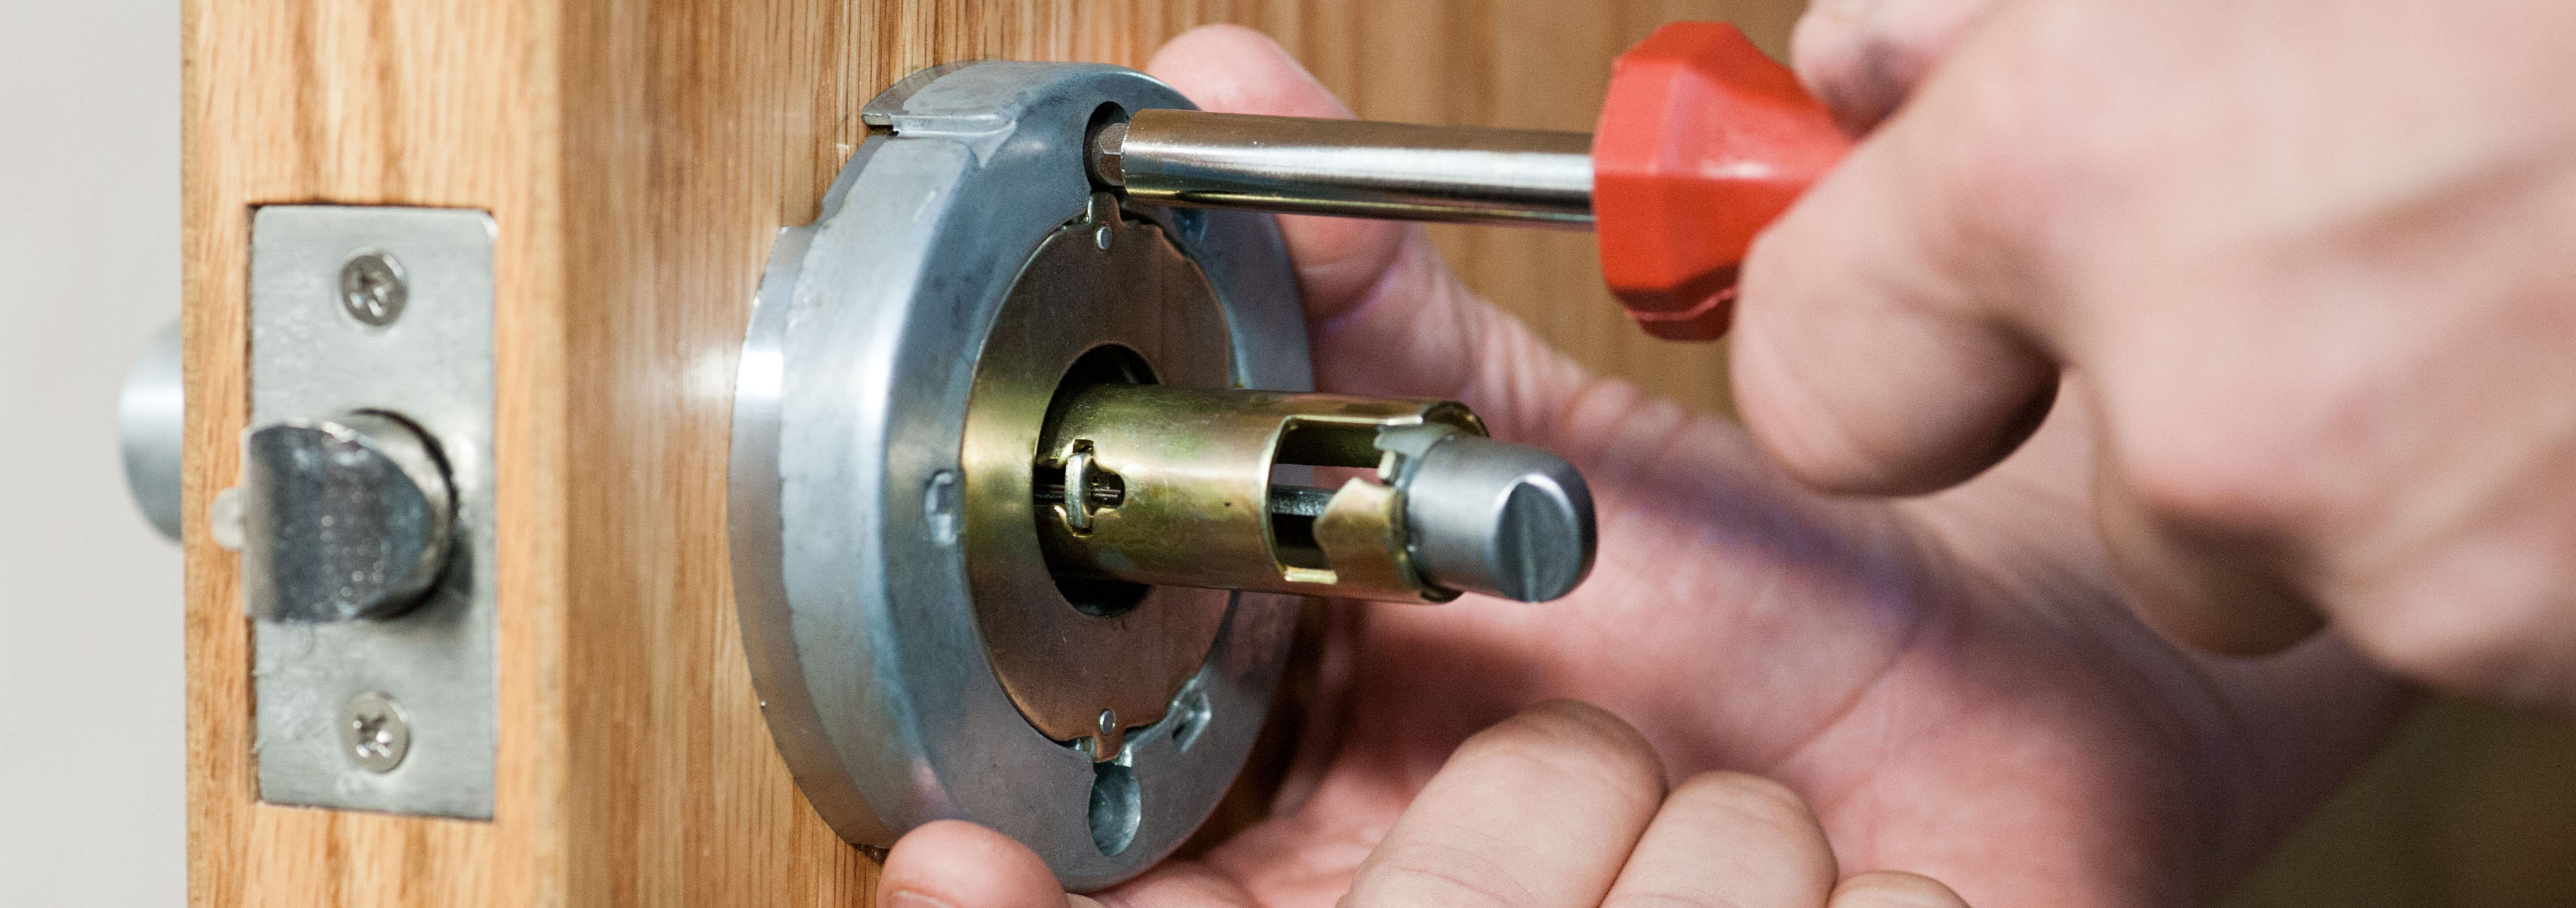 installing lock